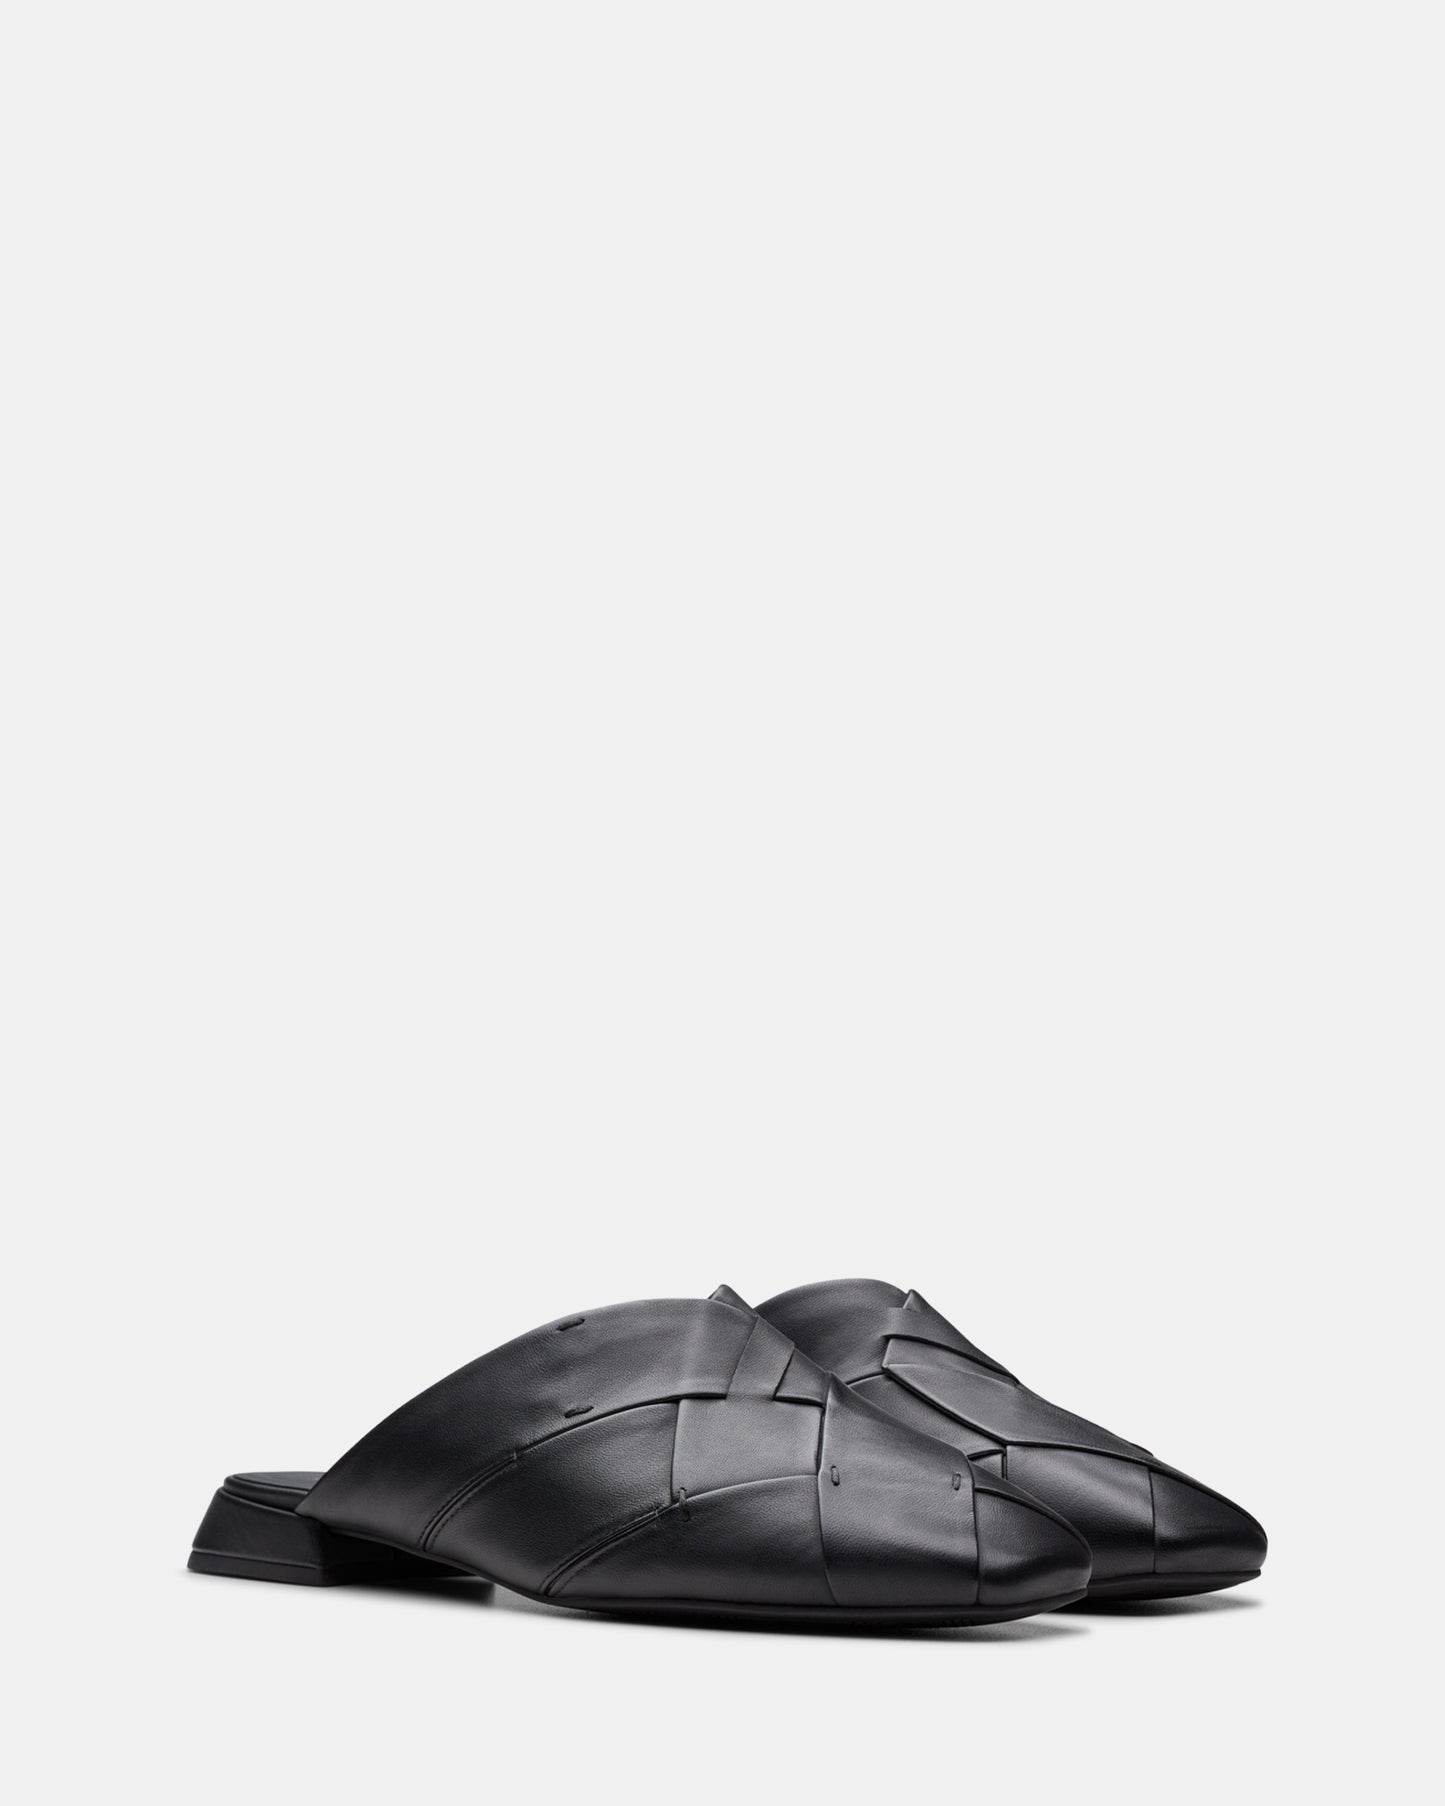 Ubree15 Woven Black Leather